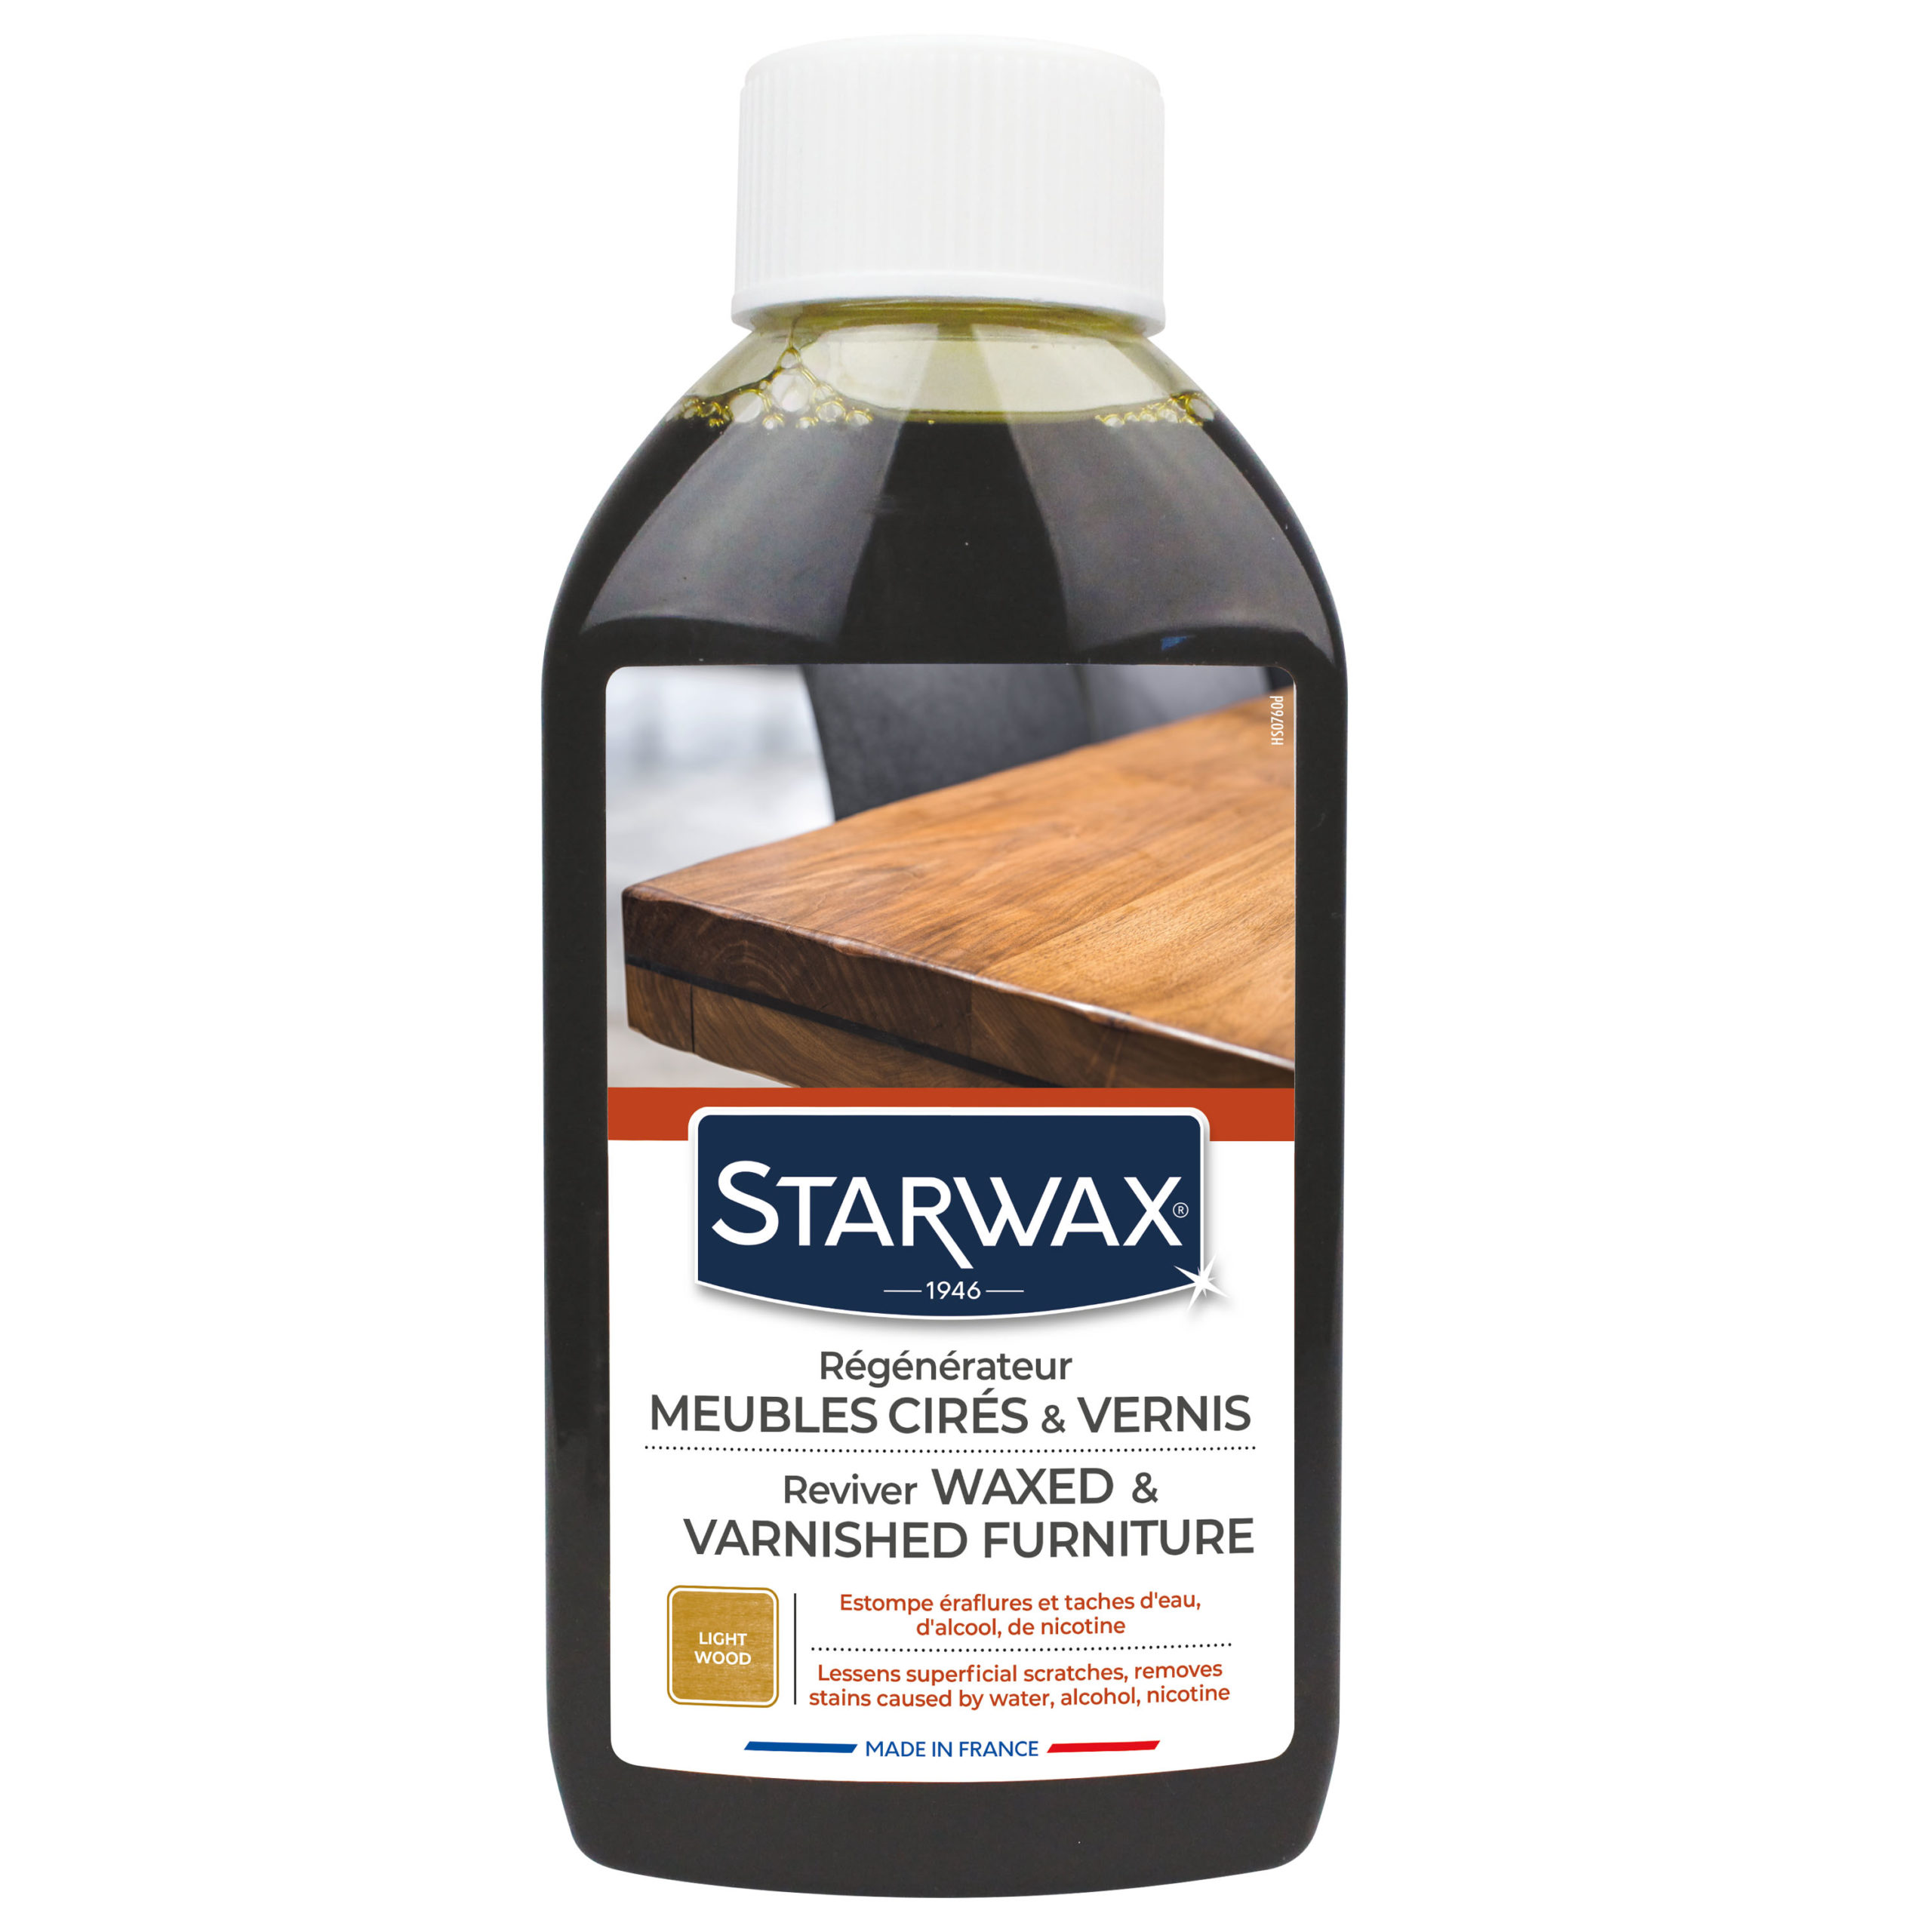 STARWAX, Lotion nettoyante cuir 200ml, Starwax